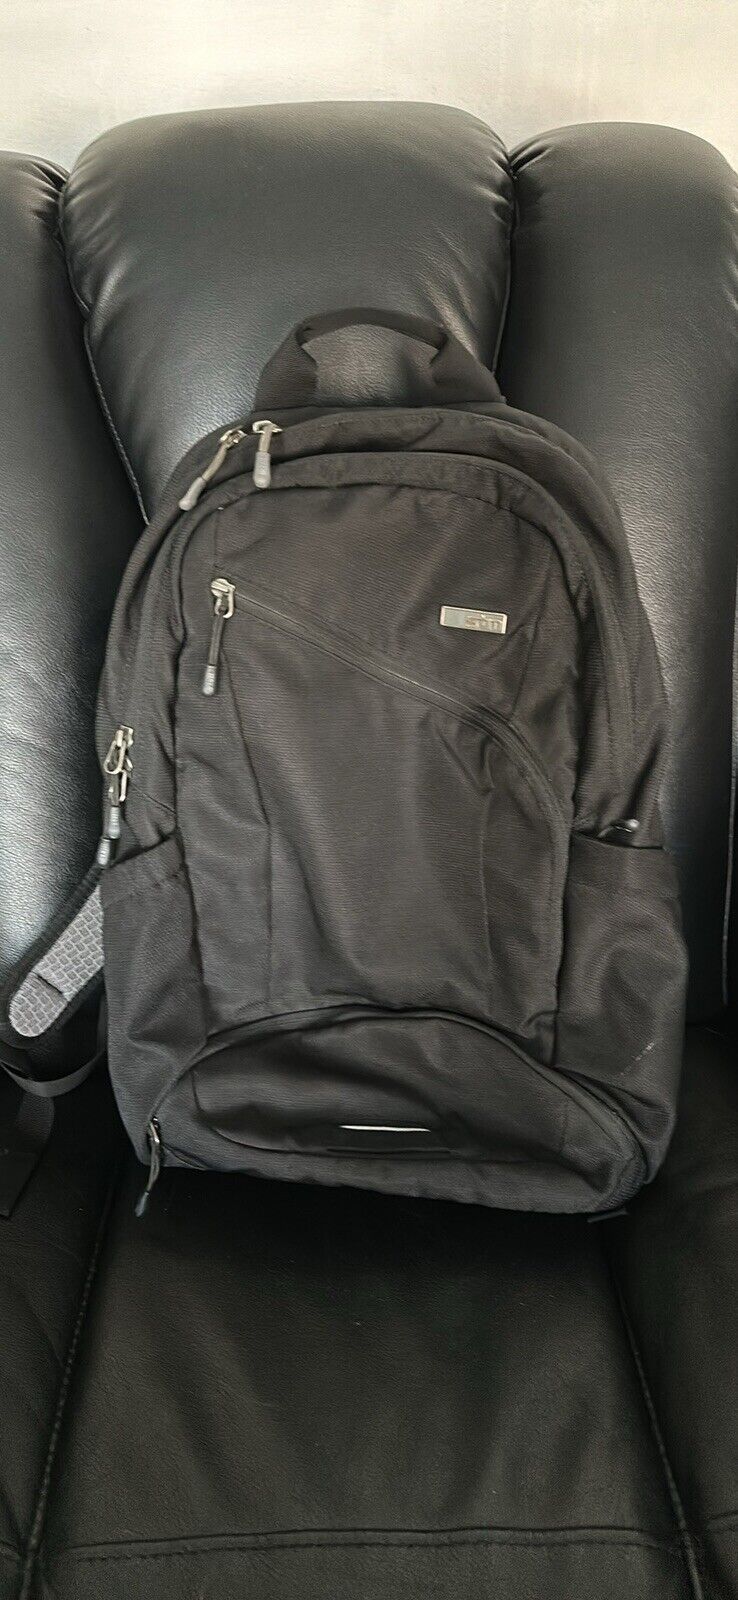 Vintage STM laptop backpack. Excellent condition.